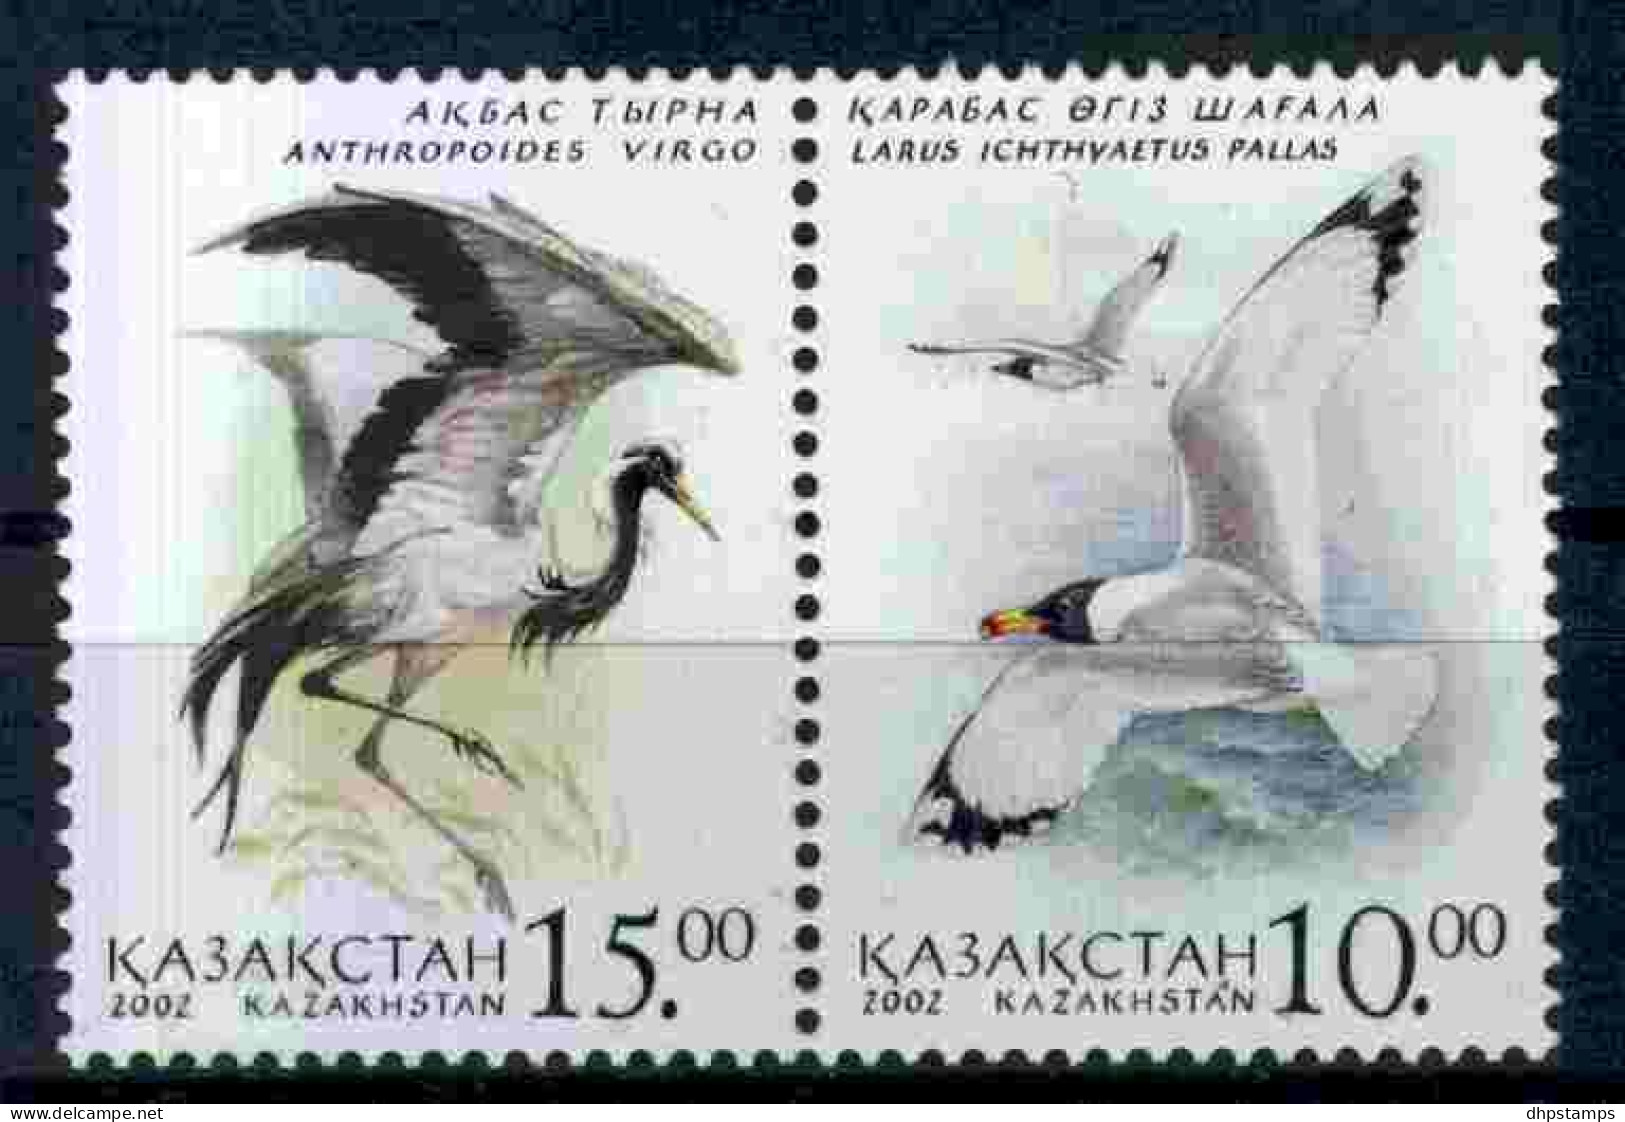 Kazakstan 2002 Birds Pair Y.T. 330/331 ** - Kazakistan